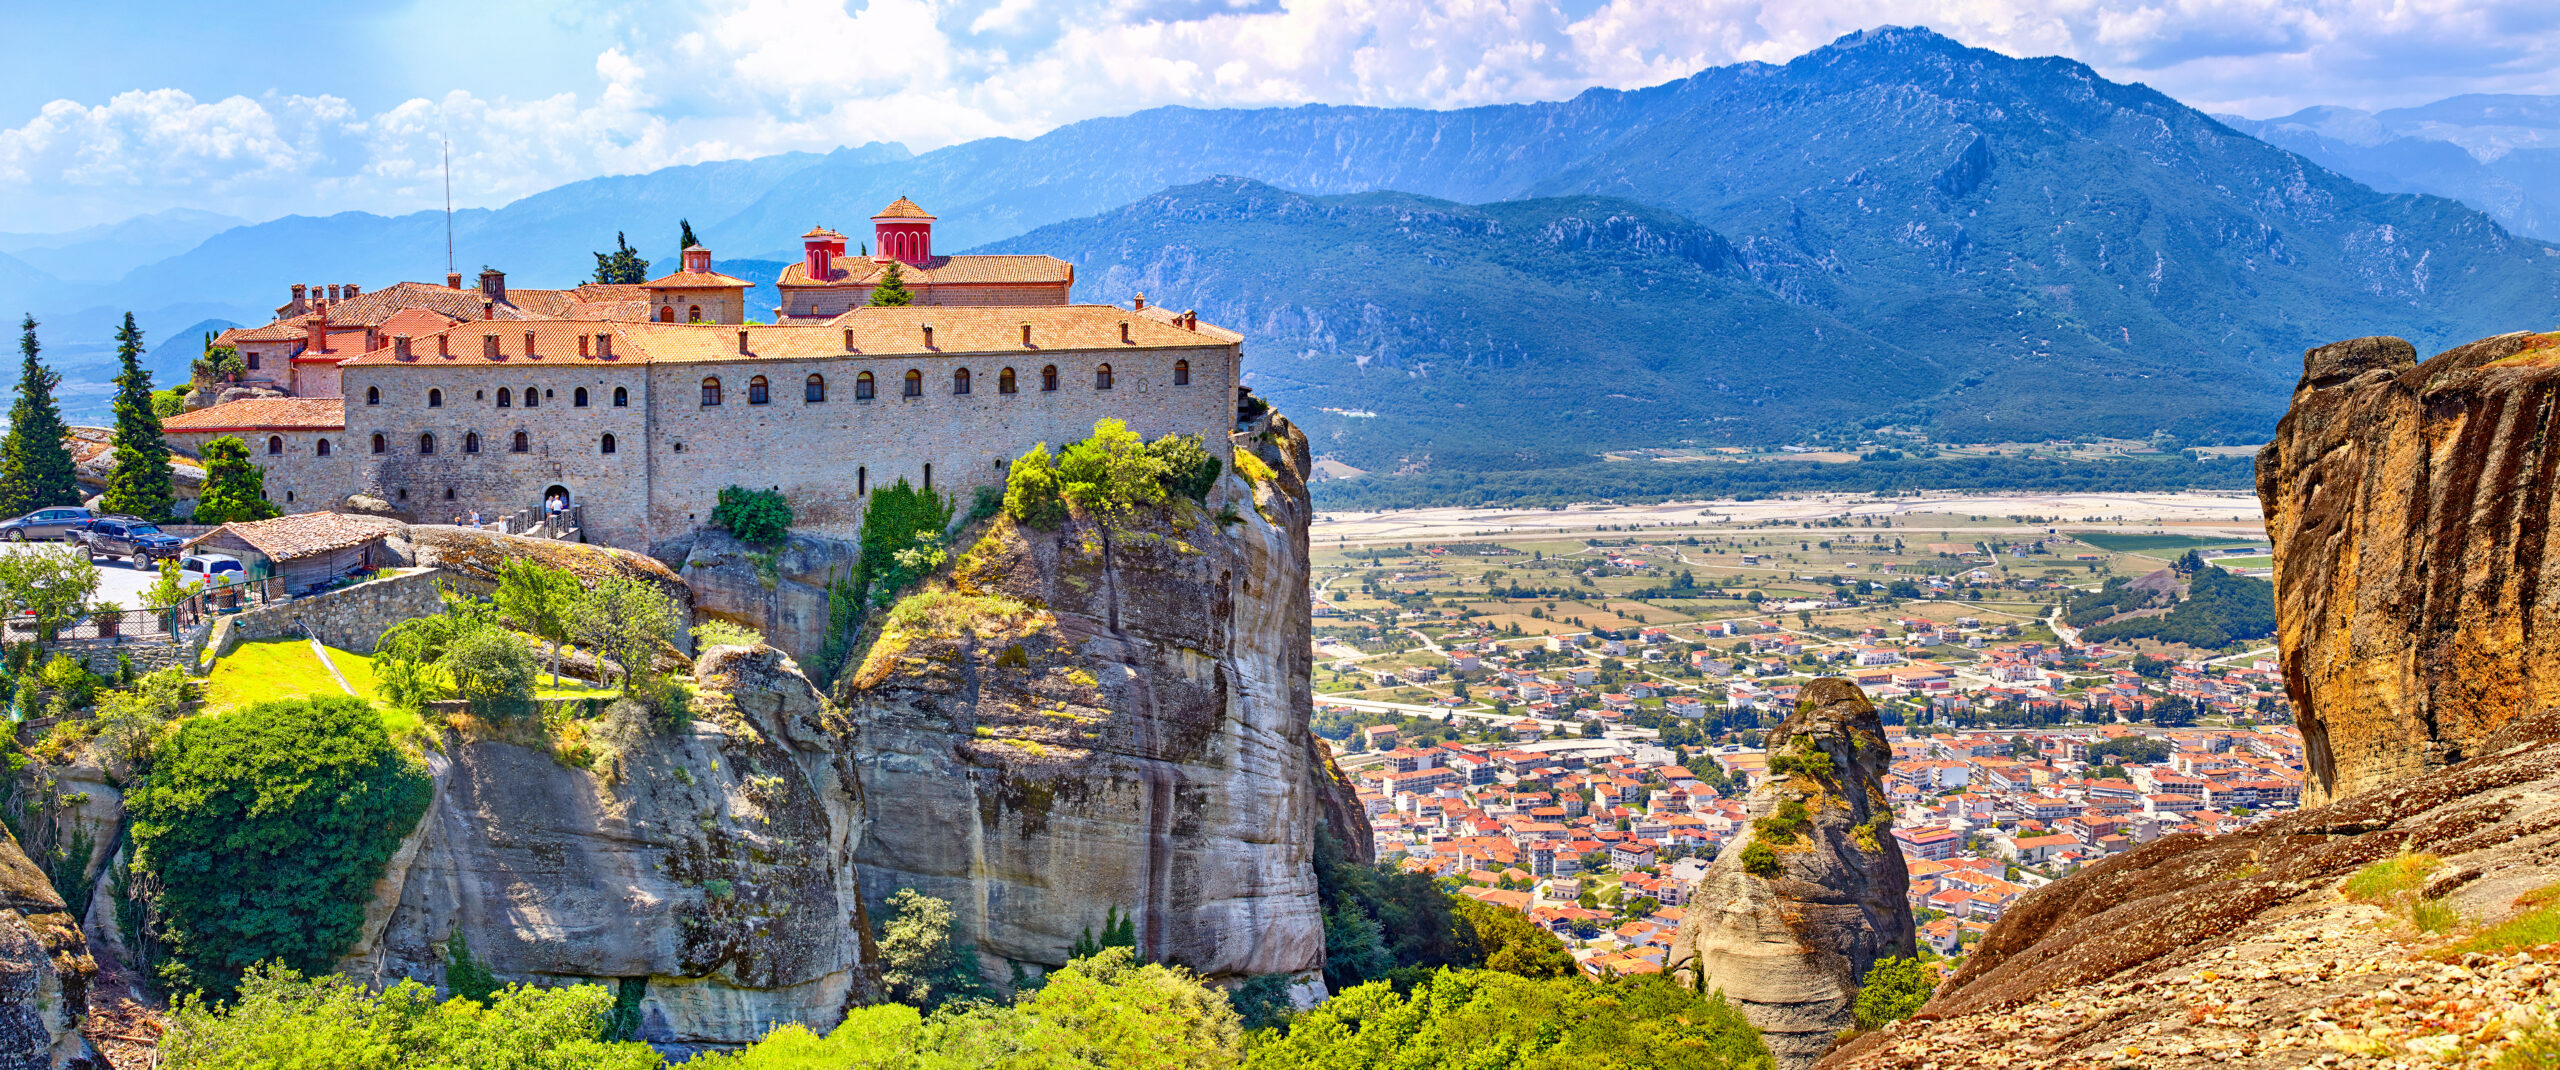 the,meteora,monasteries,,greece,kalambaka.,unesco,world,heritage,site.,colorful